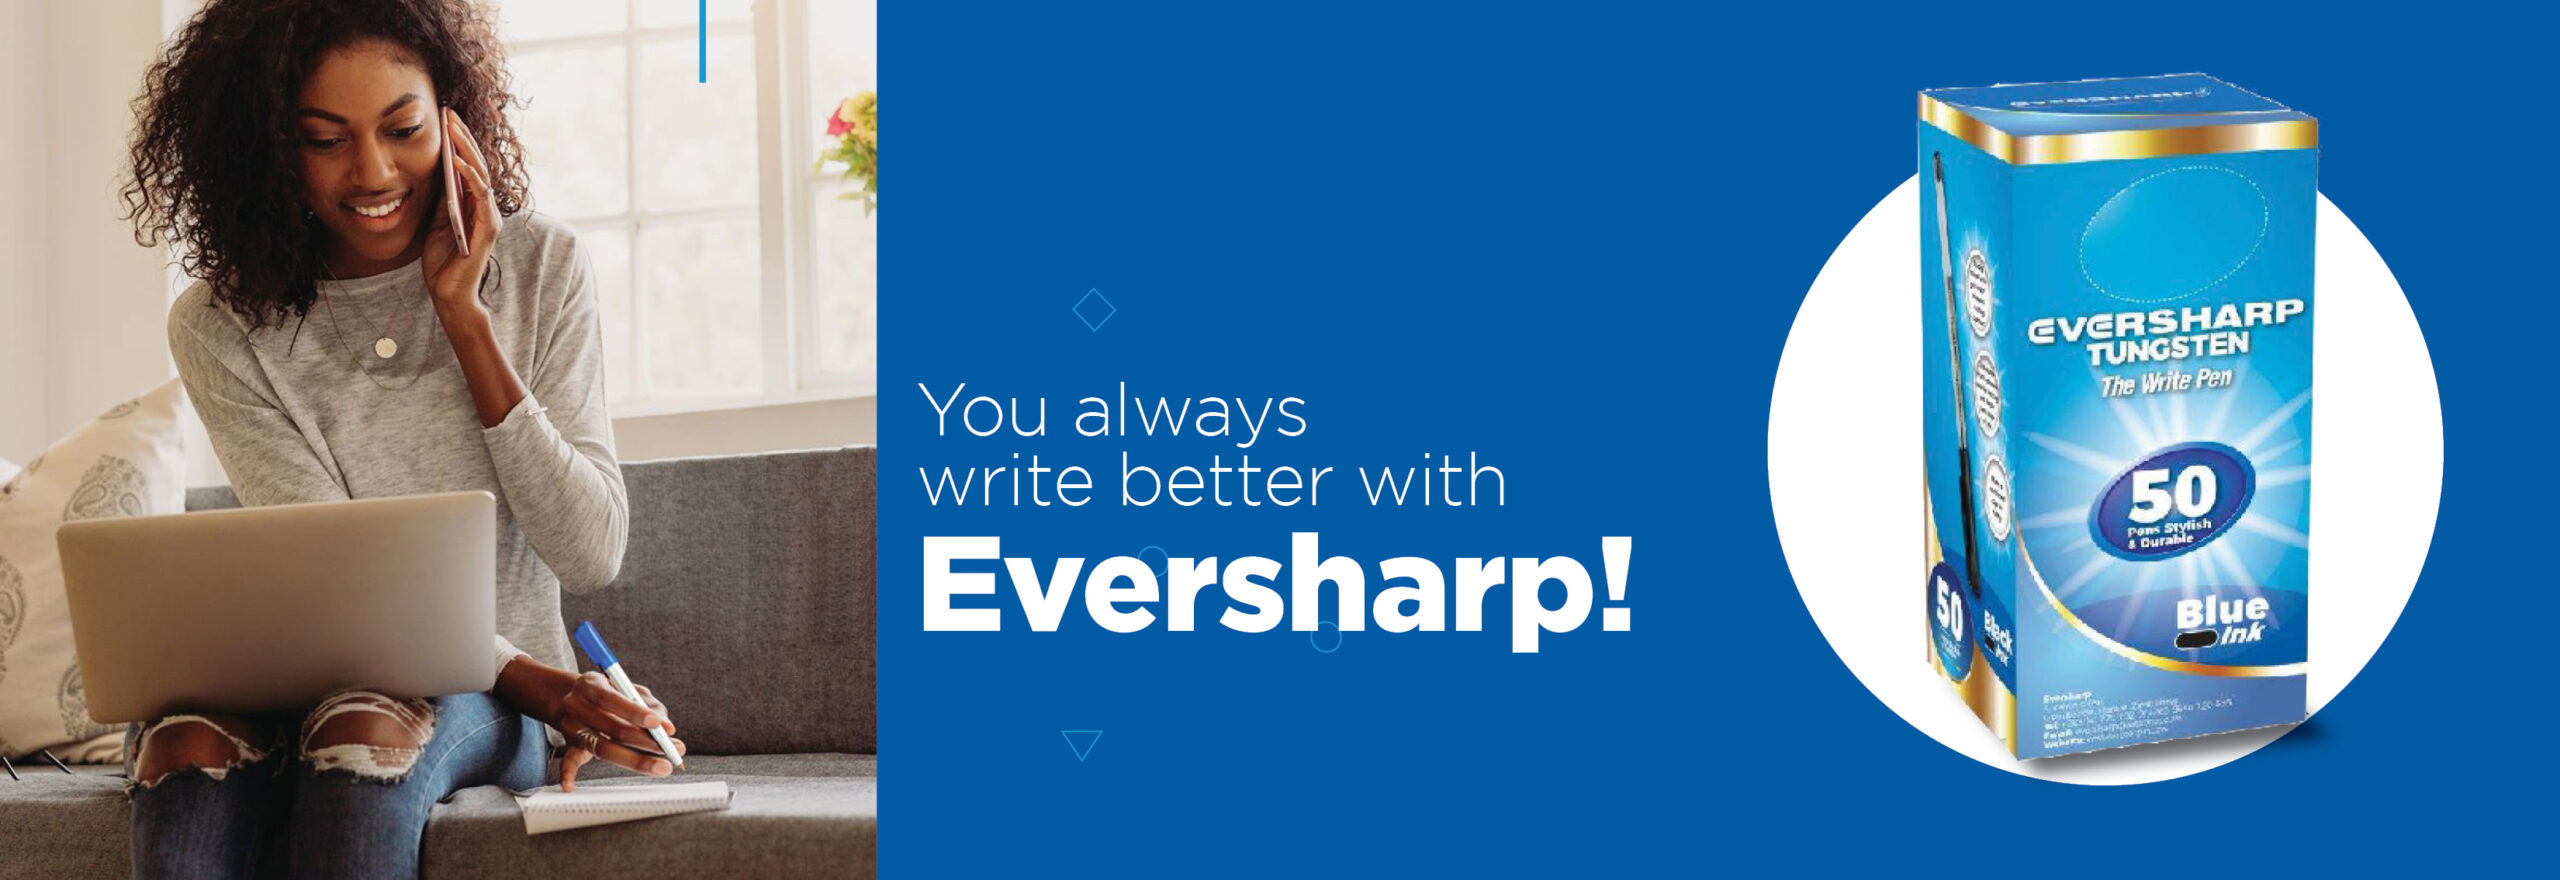 Eversharp pen